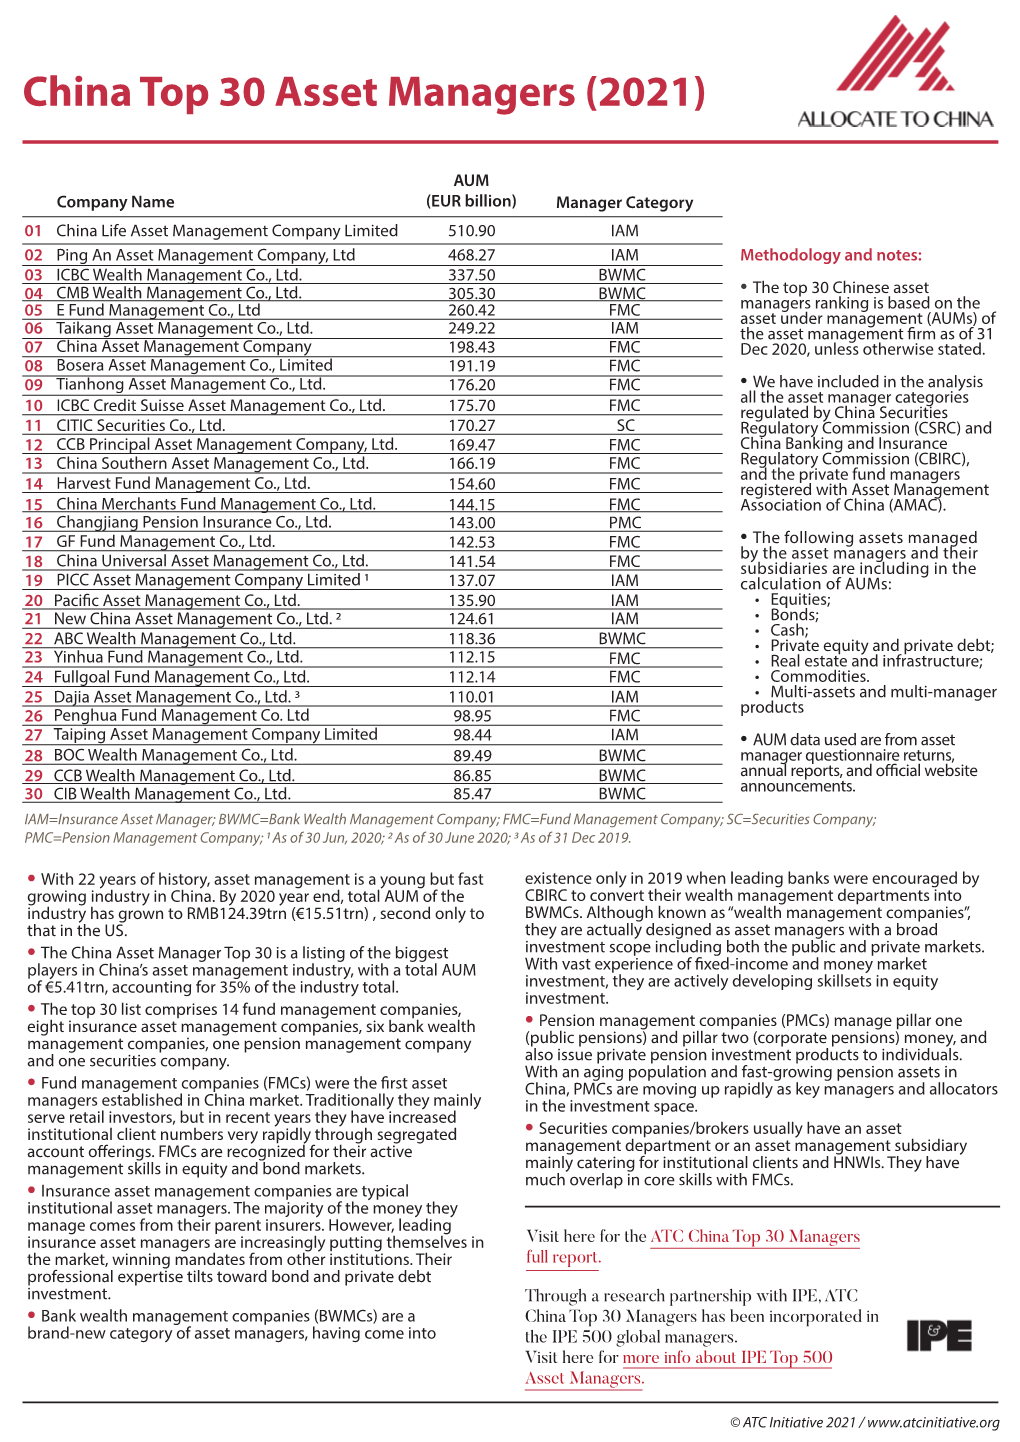 ATC China Top 30 Asset Managers (2021) List